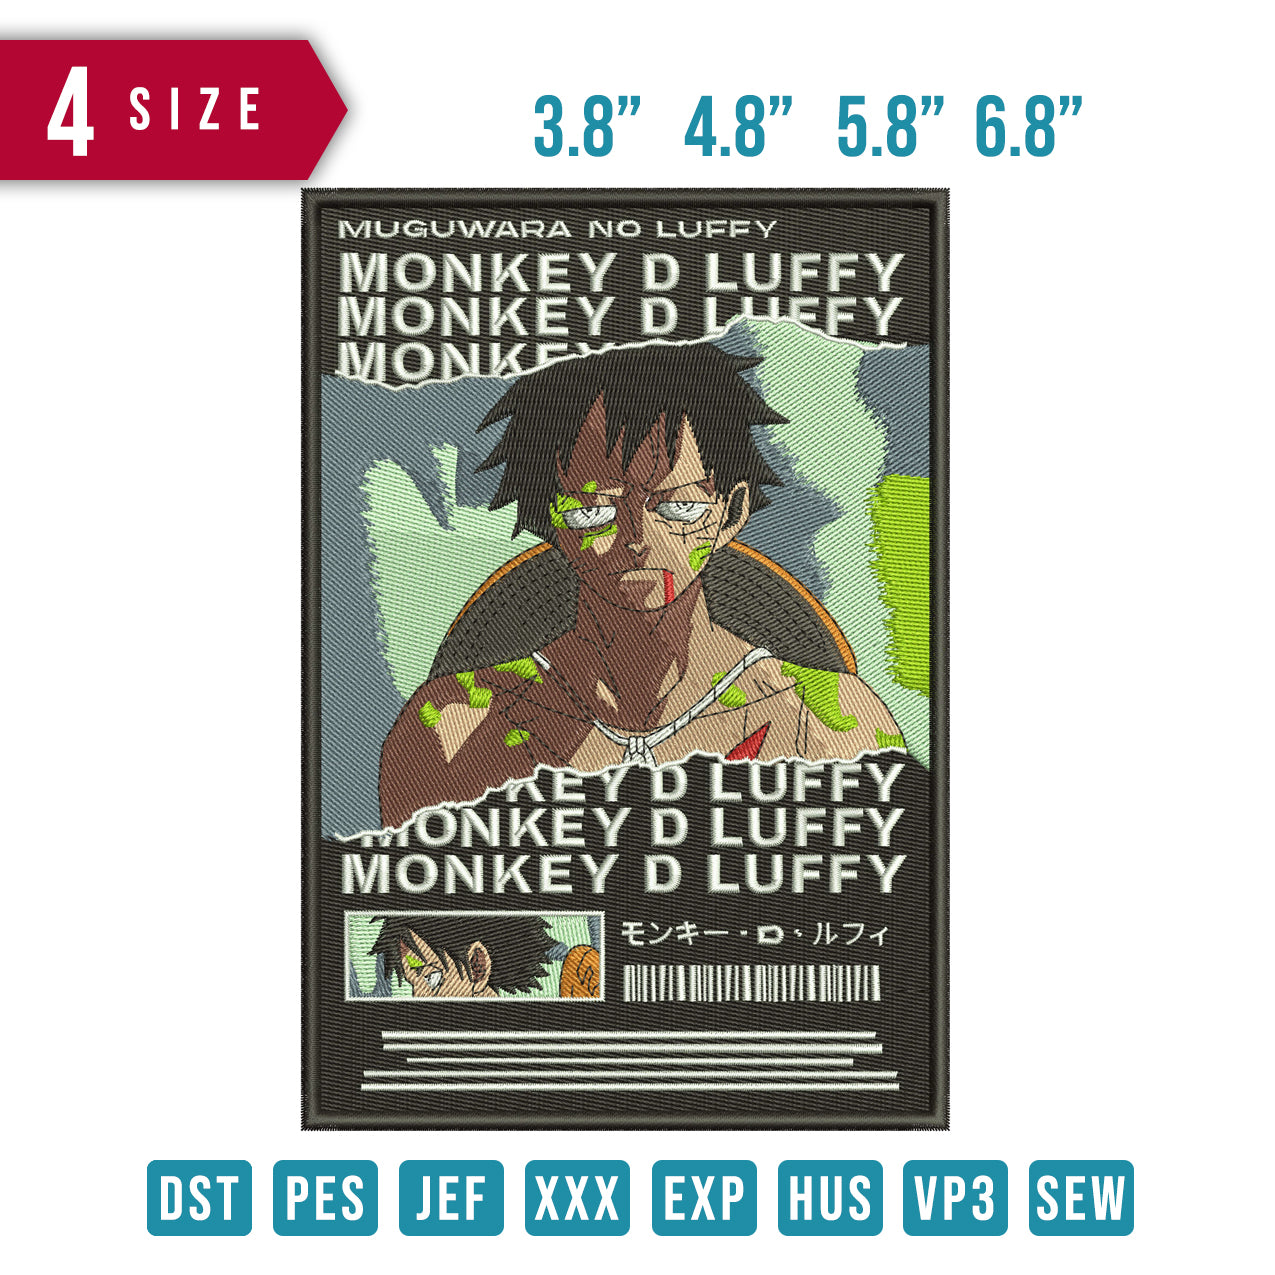 Monkey D luffy Poster